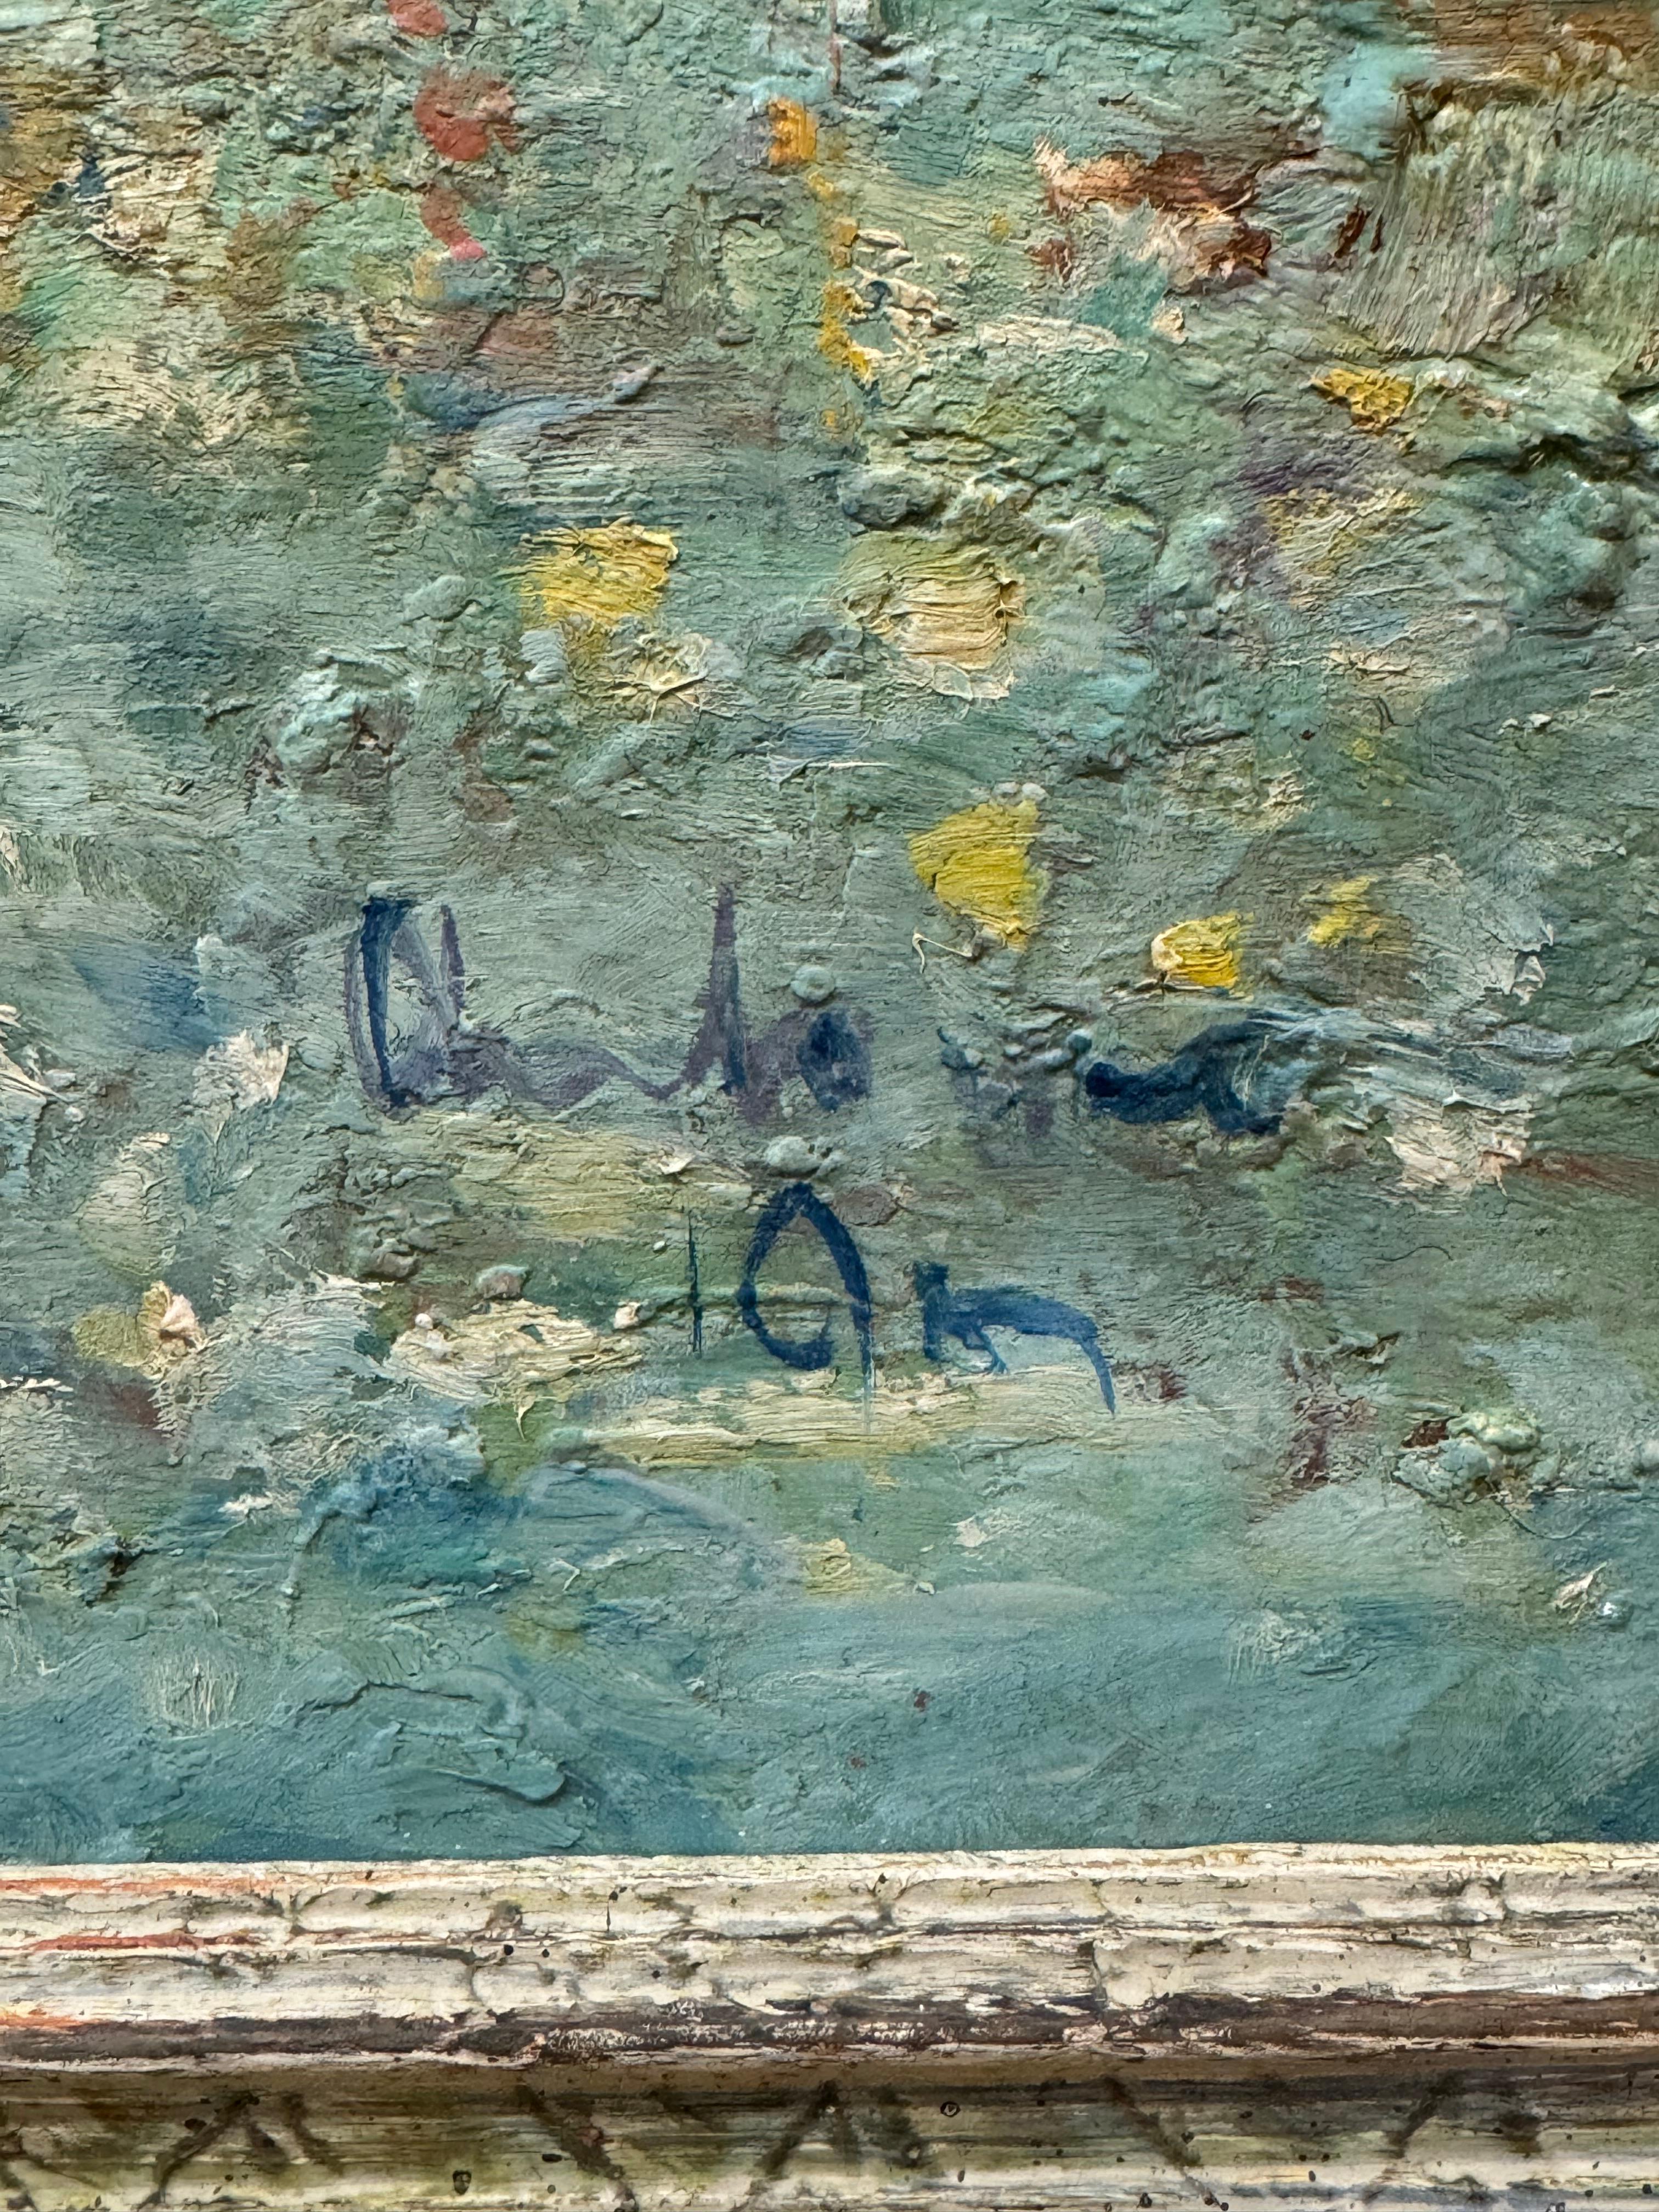 Mid century Italian abstract, titled “Lake Garda” 
Signed indistinctly 
Oil on masonite
26 x 27.25 framed
21.5 x 22.5 unframed
